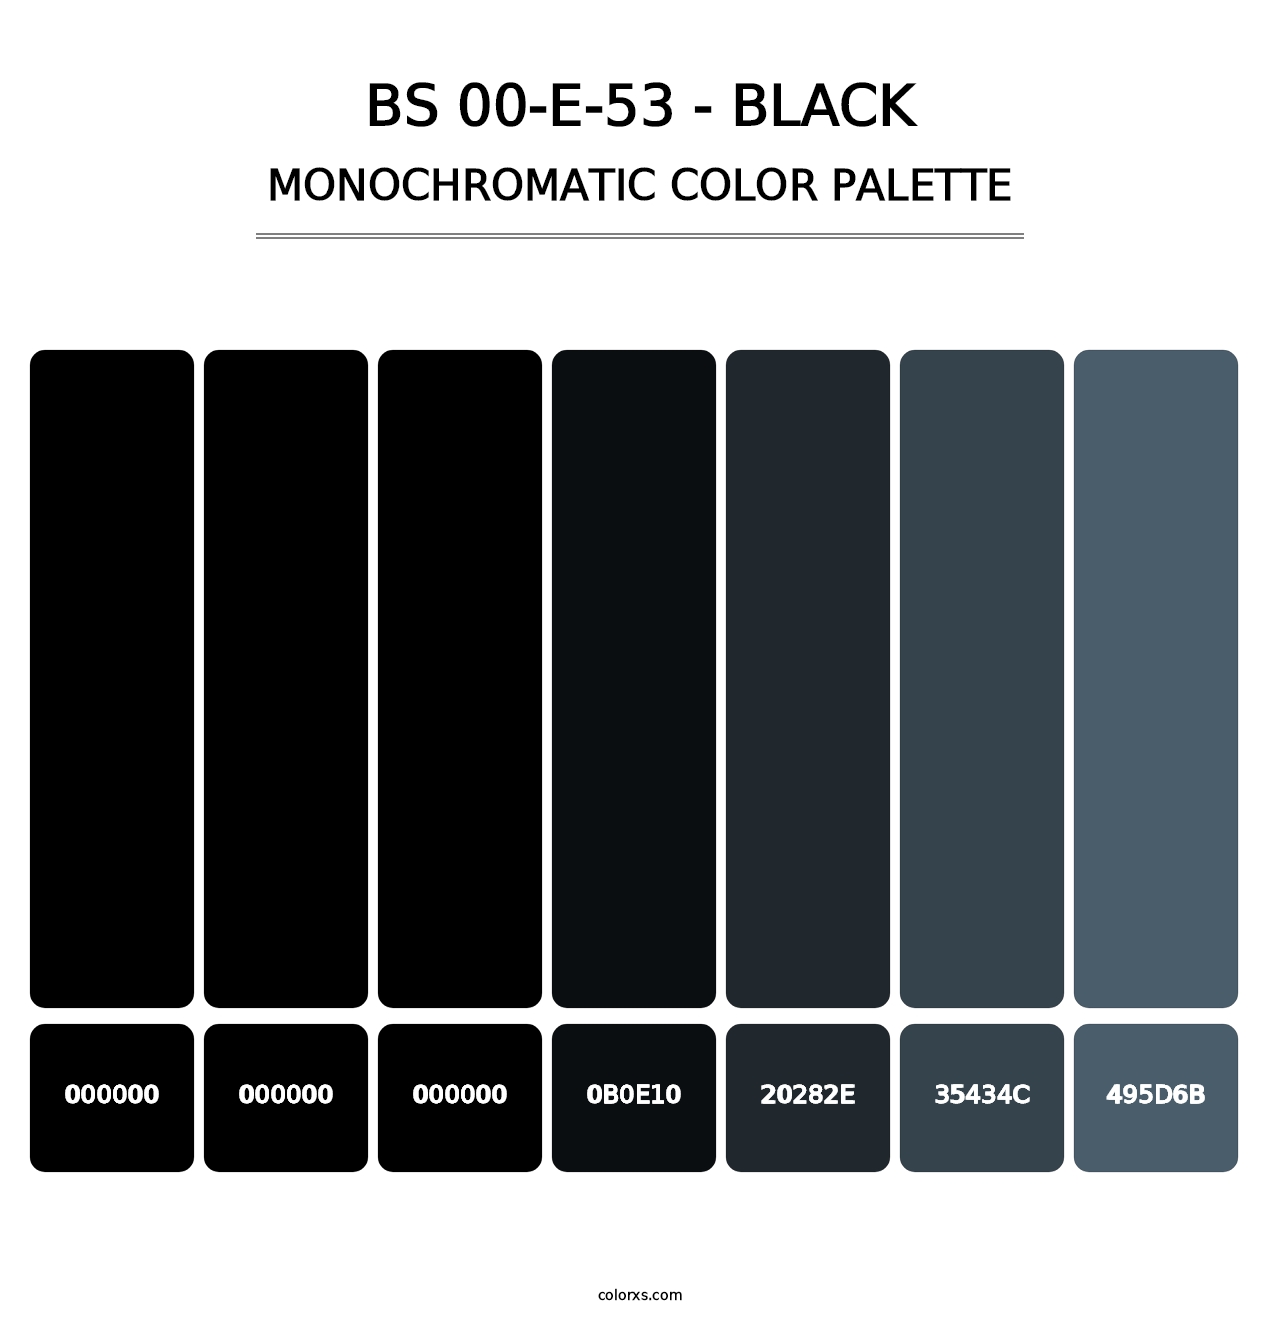 BS 00-E-53 - Black - Monochromatic Color Palette